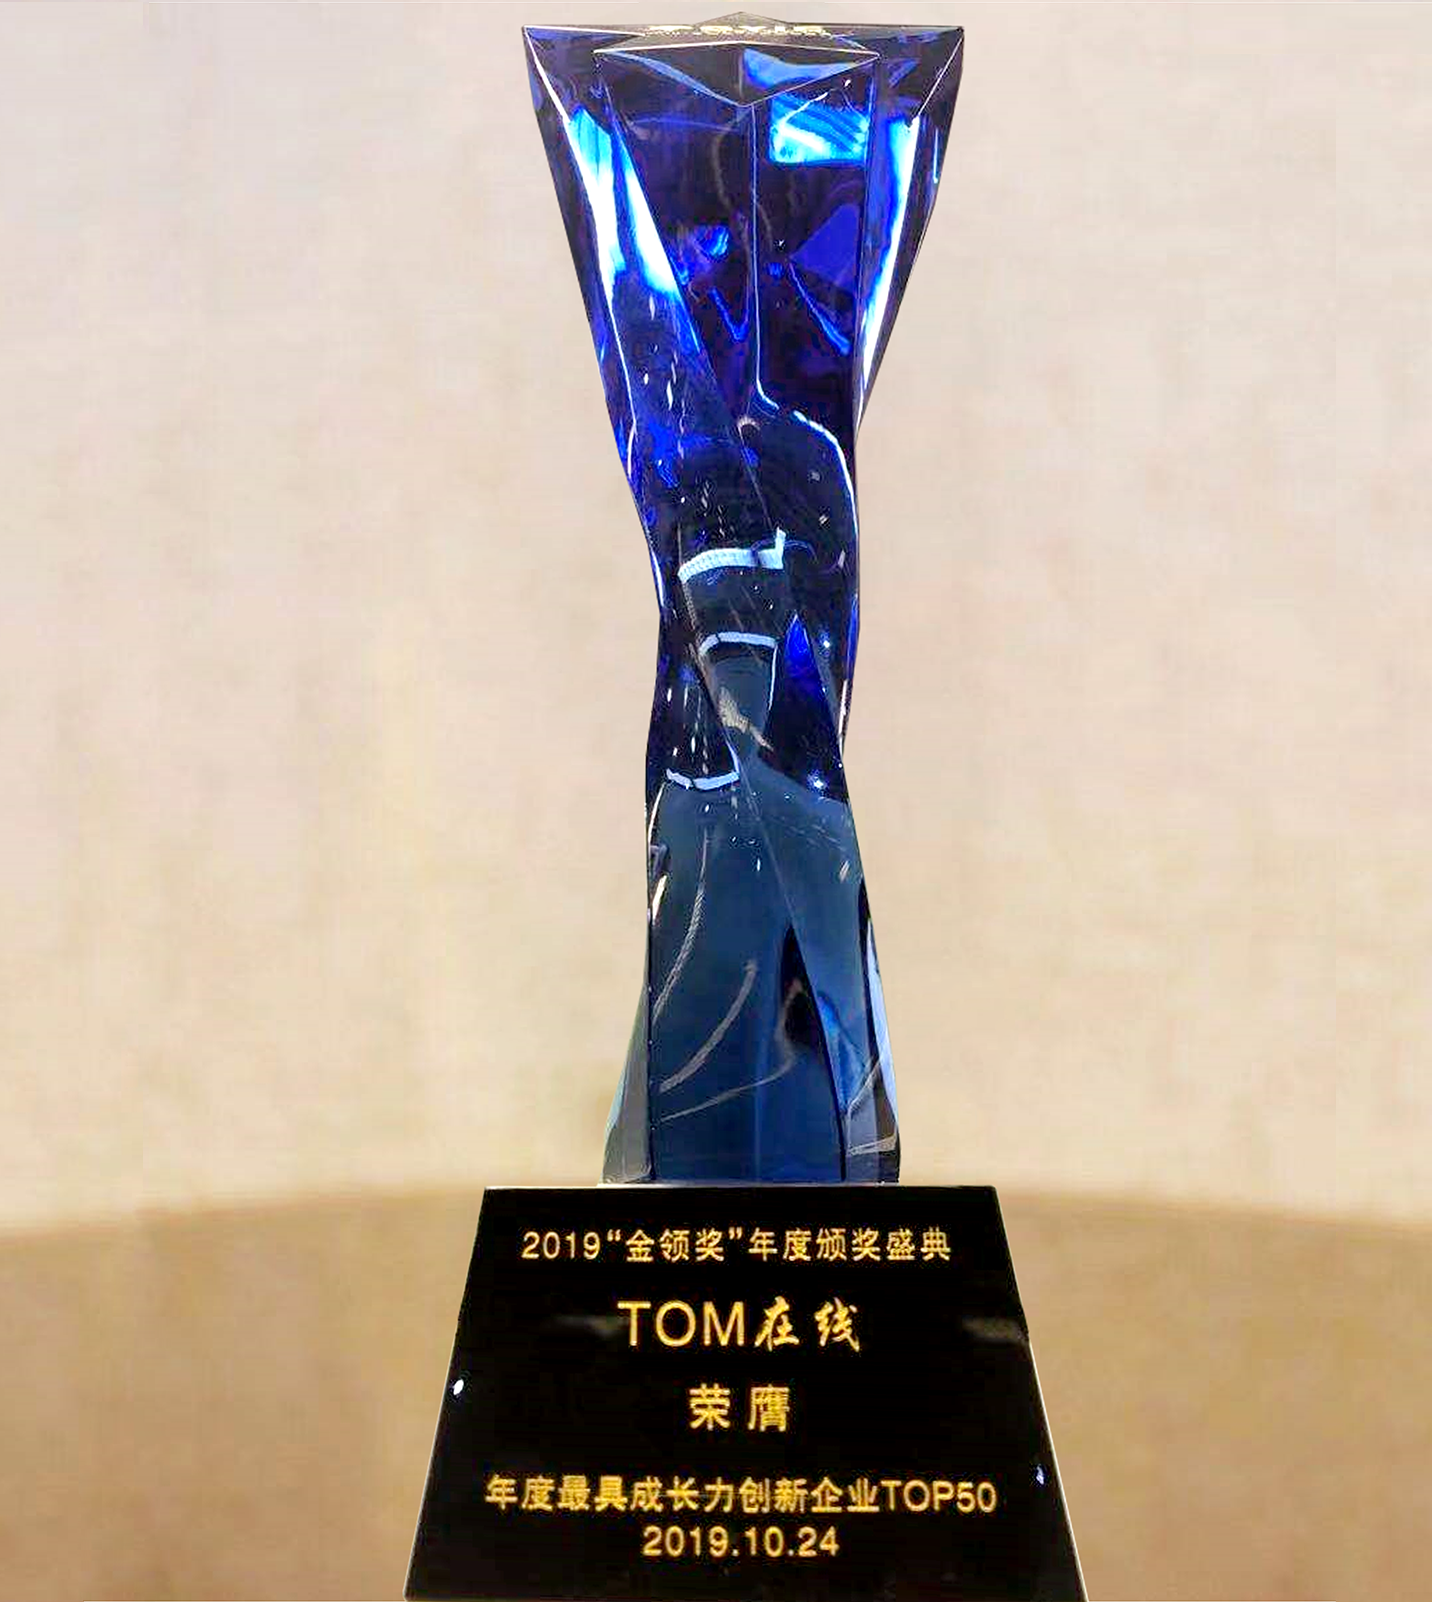 TOM荣获2019年第三届全球青年创新大会“最具成长力创新企业”